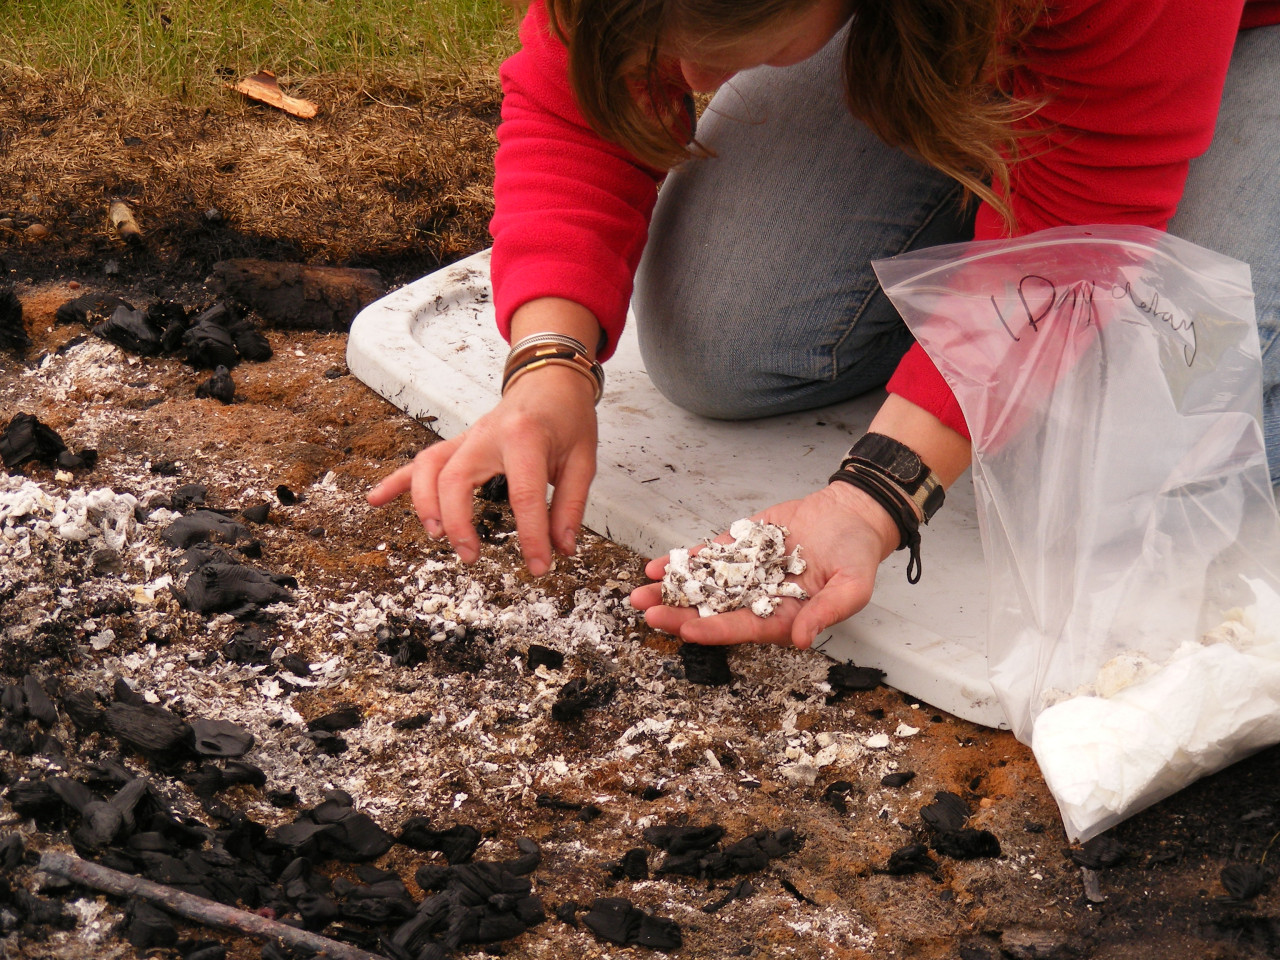 Student finding bone fragments in burn pile